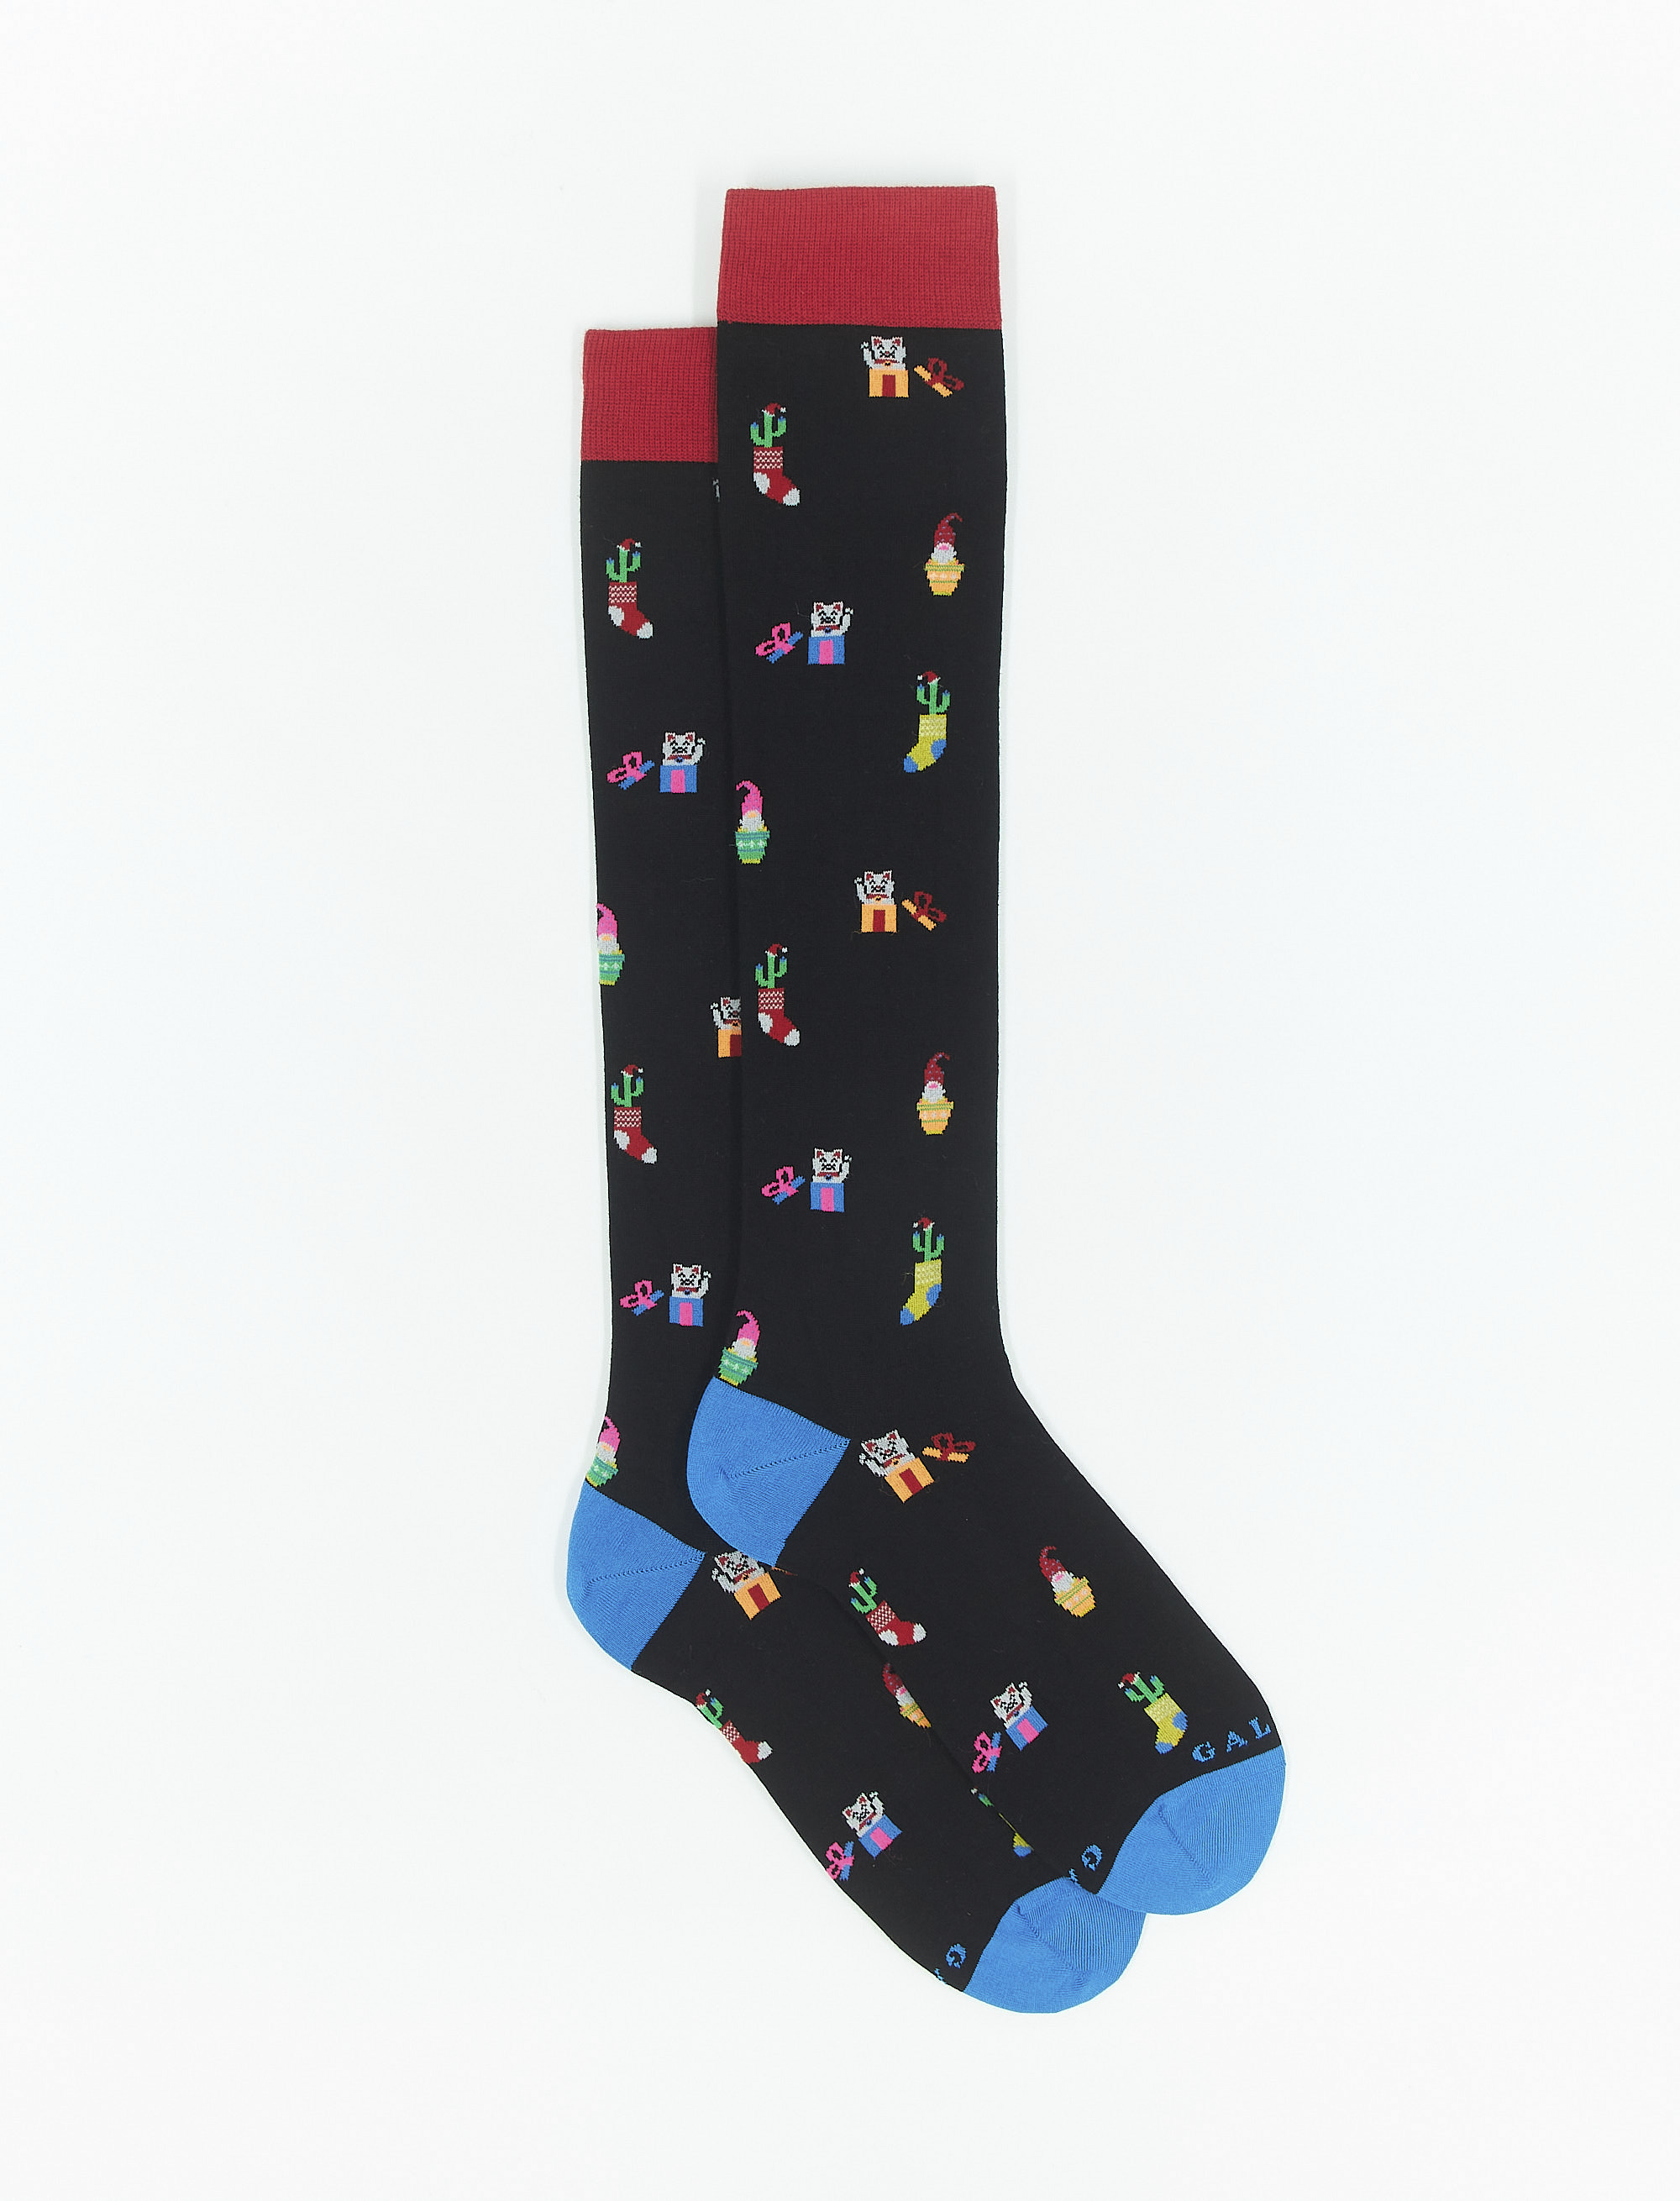 Women's long coal grey light cotton socks with Christmas motif | Gallo 1927 - Official Online Shop